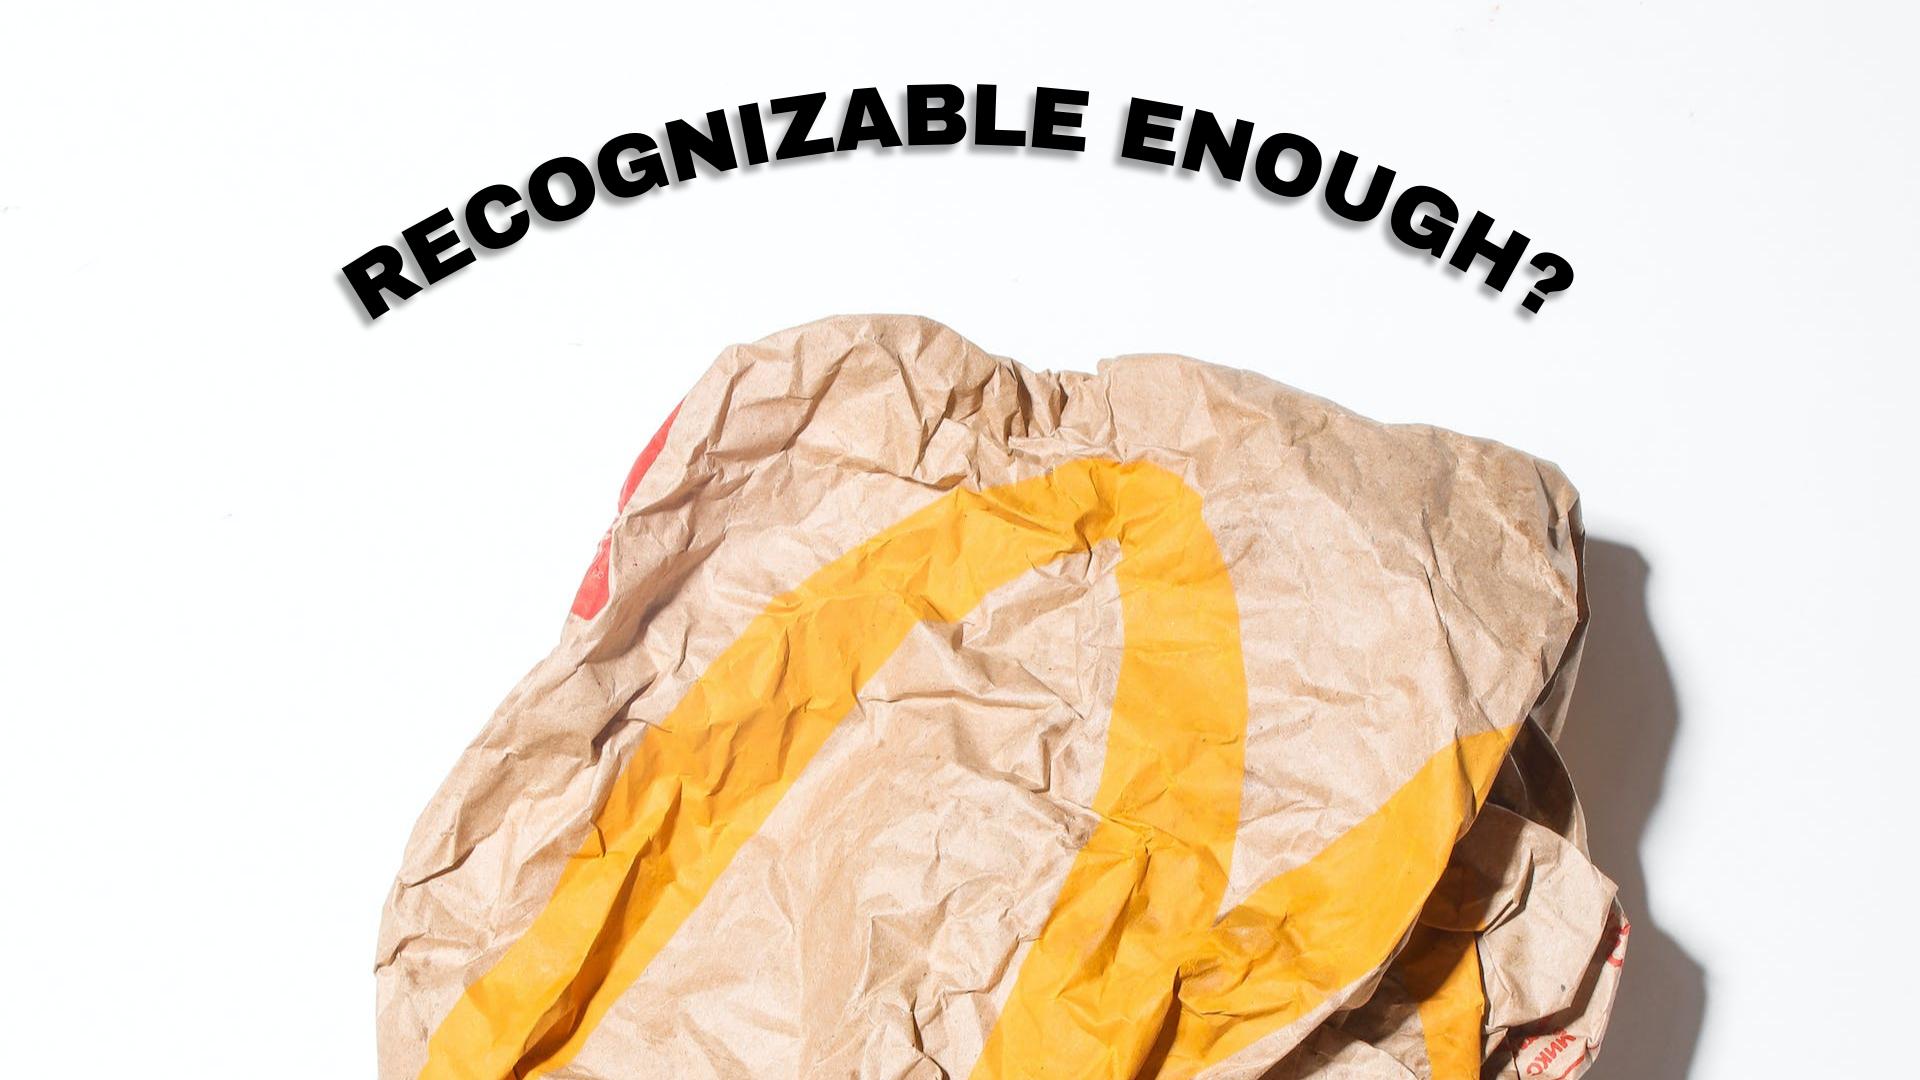 crumpled, yet recognizable mcdonald's paper bag with branding elements